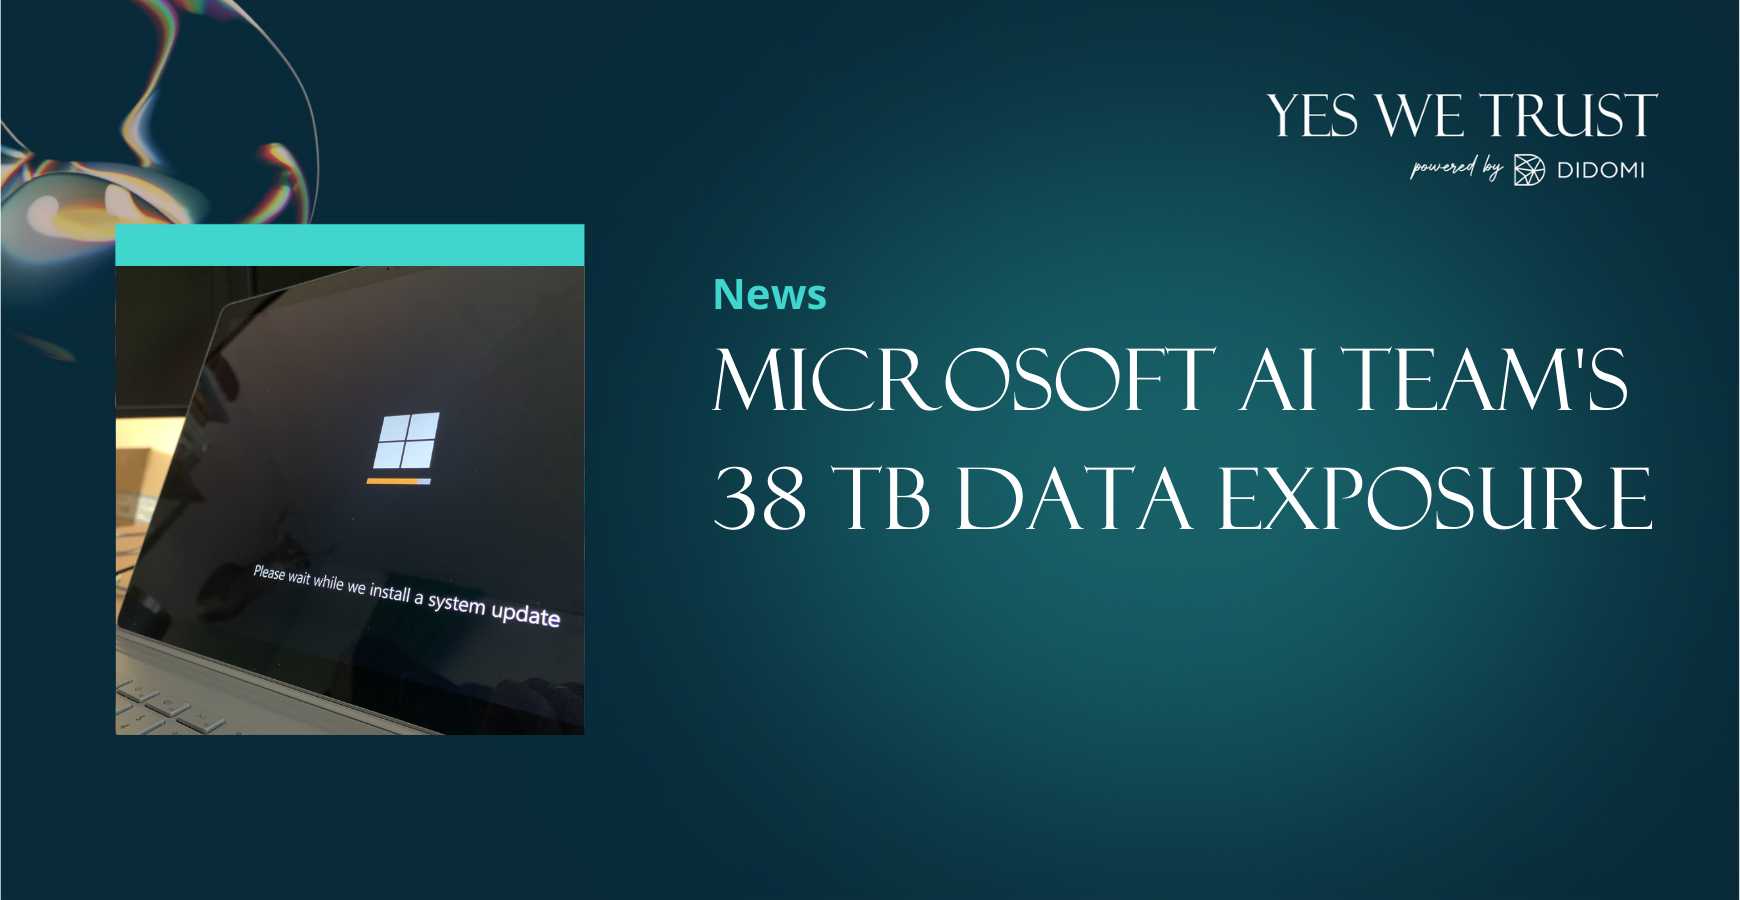 Microsoft AI team's oversight results in 38 TB data exposure